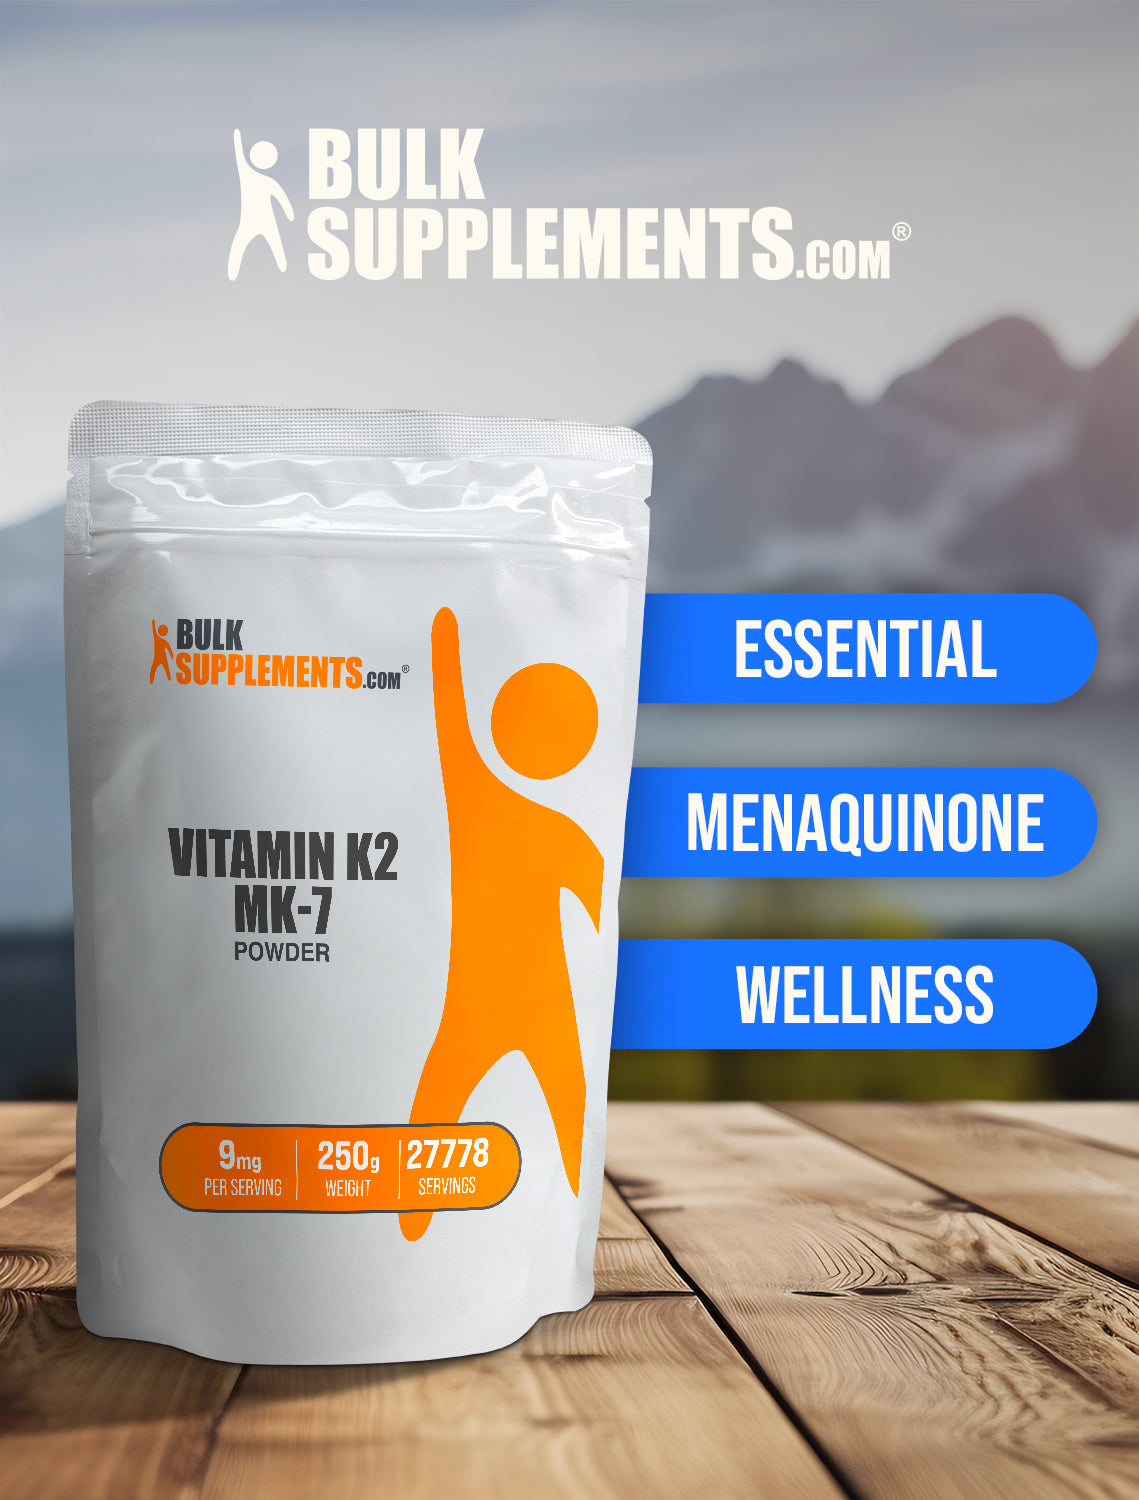 Vitamin K2 MK-7 powder keyword image 250g